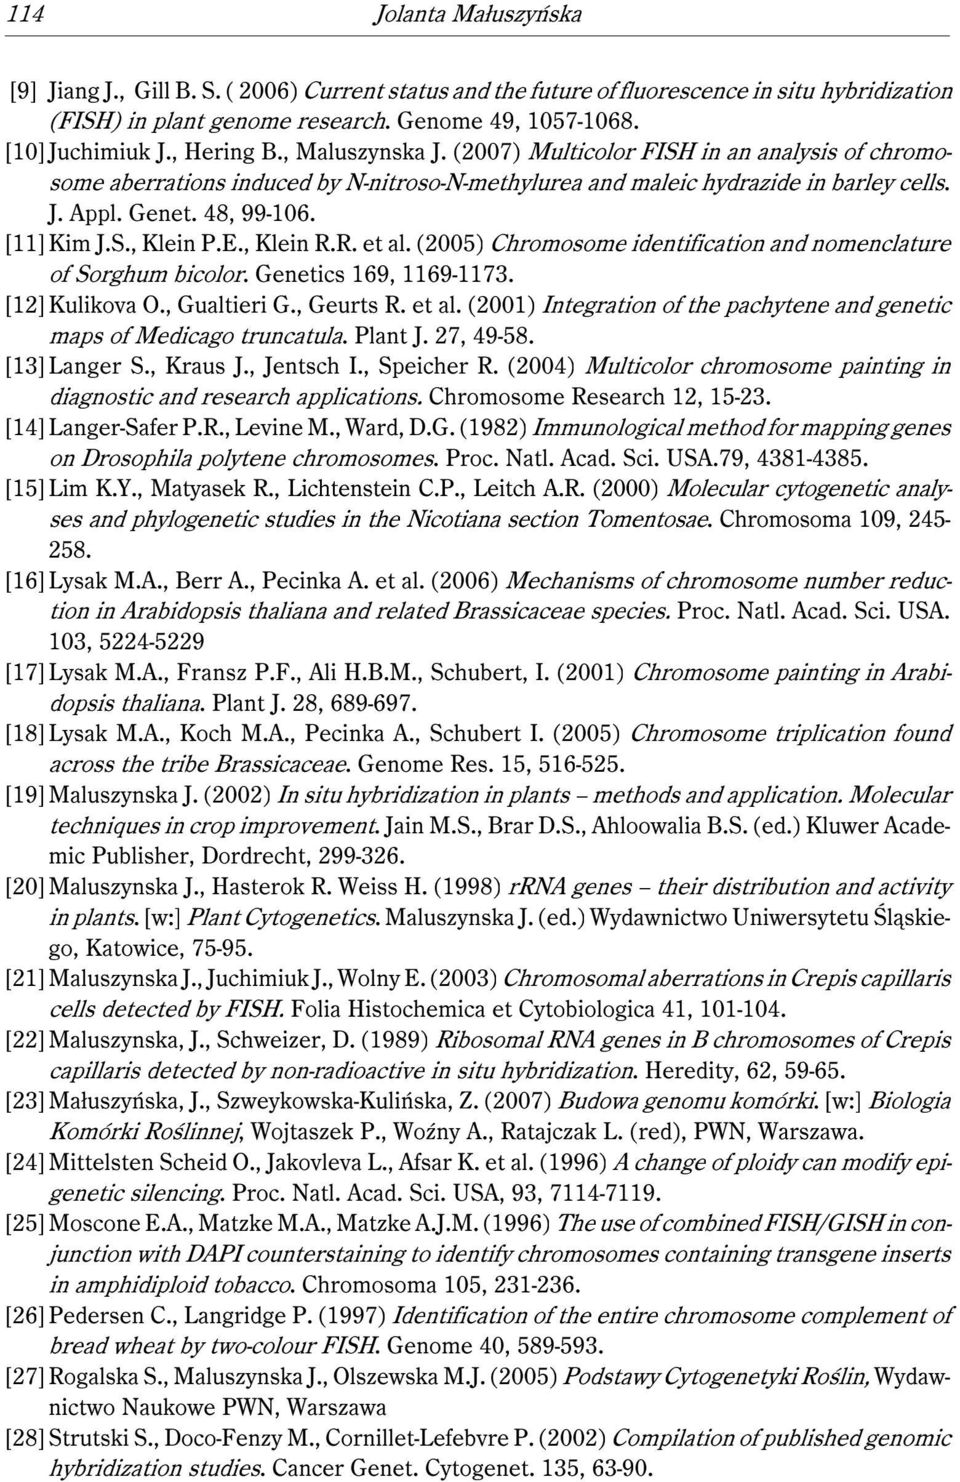 [11]Kim J.S., Klein P.E., Klein R.R. et al. (2005) Chromosome identification and nomenclature of Sorghum bicolor. Genetics 169, 1169-1173. [12]Kulikova O., Gualtieri G., Geurts R. et al. (2001) Integration of the pachytene and genetic maps of Medicago truncatula.